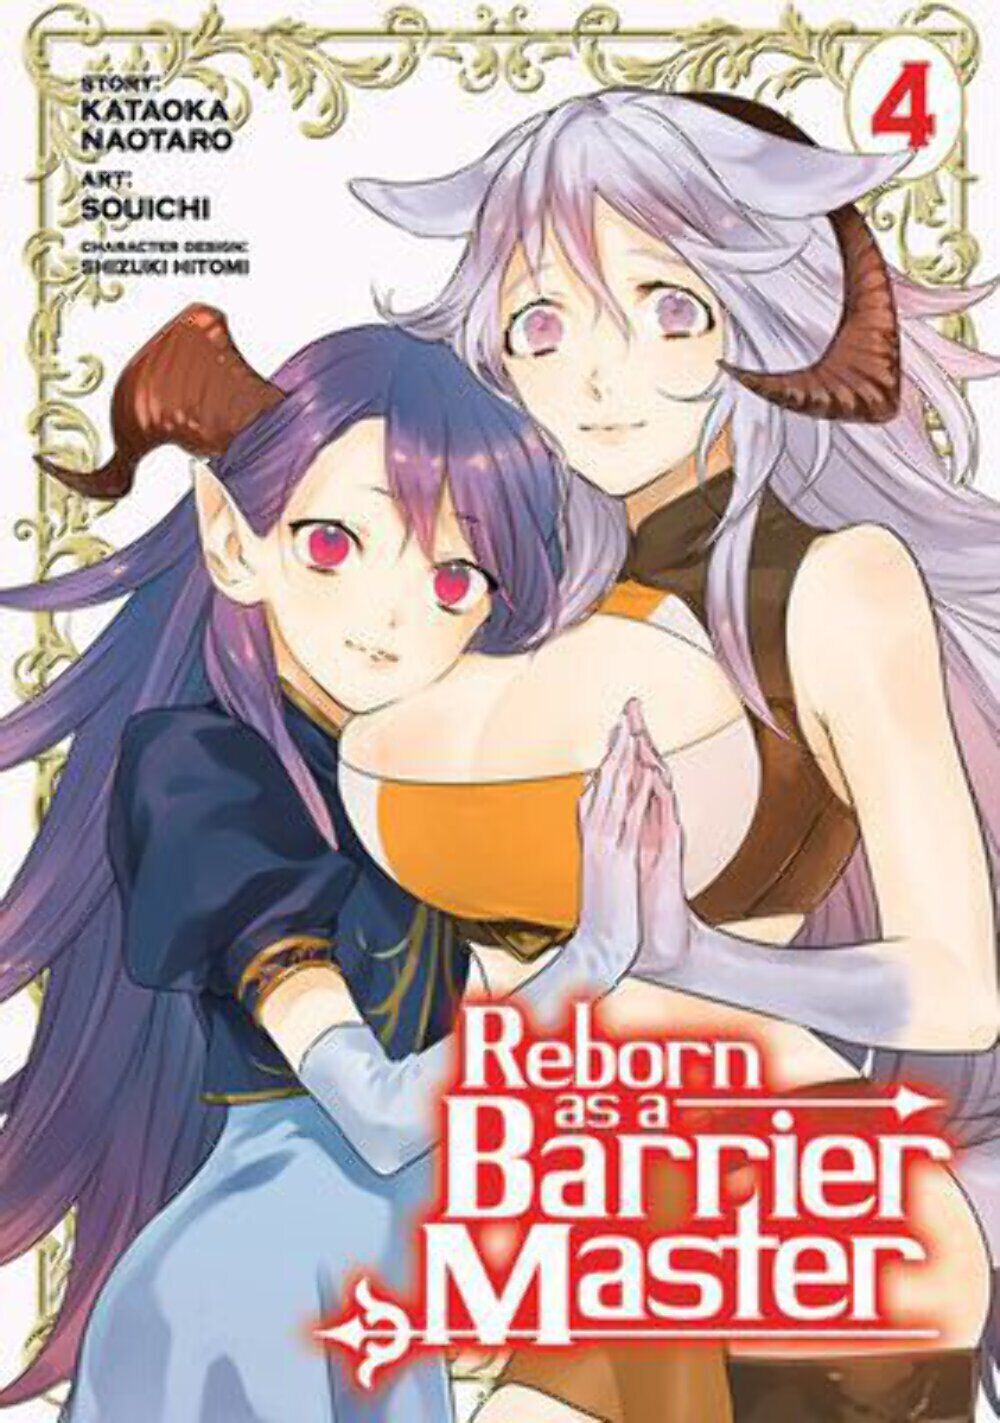 Reborn as a Barrier Master Vol 4 Used Manga English Language Graphic Novel Comic